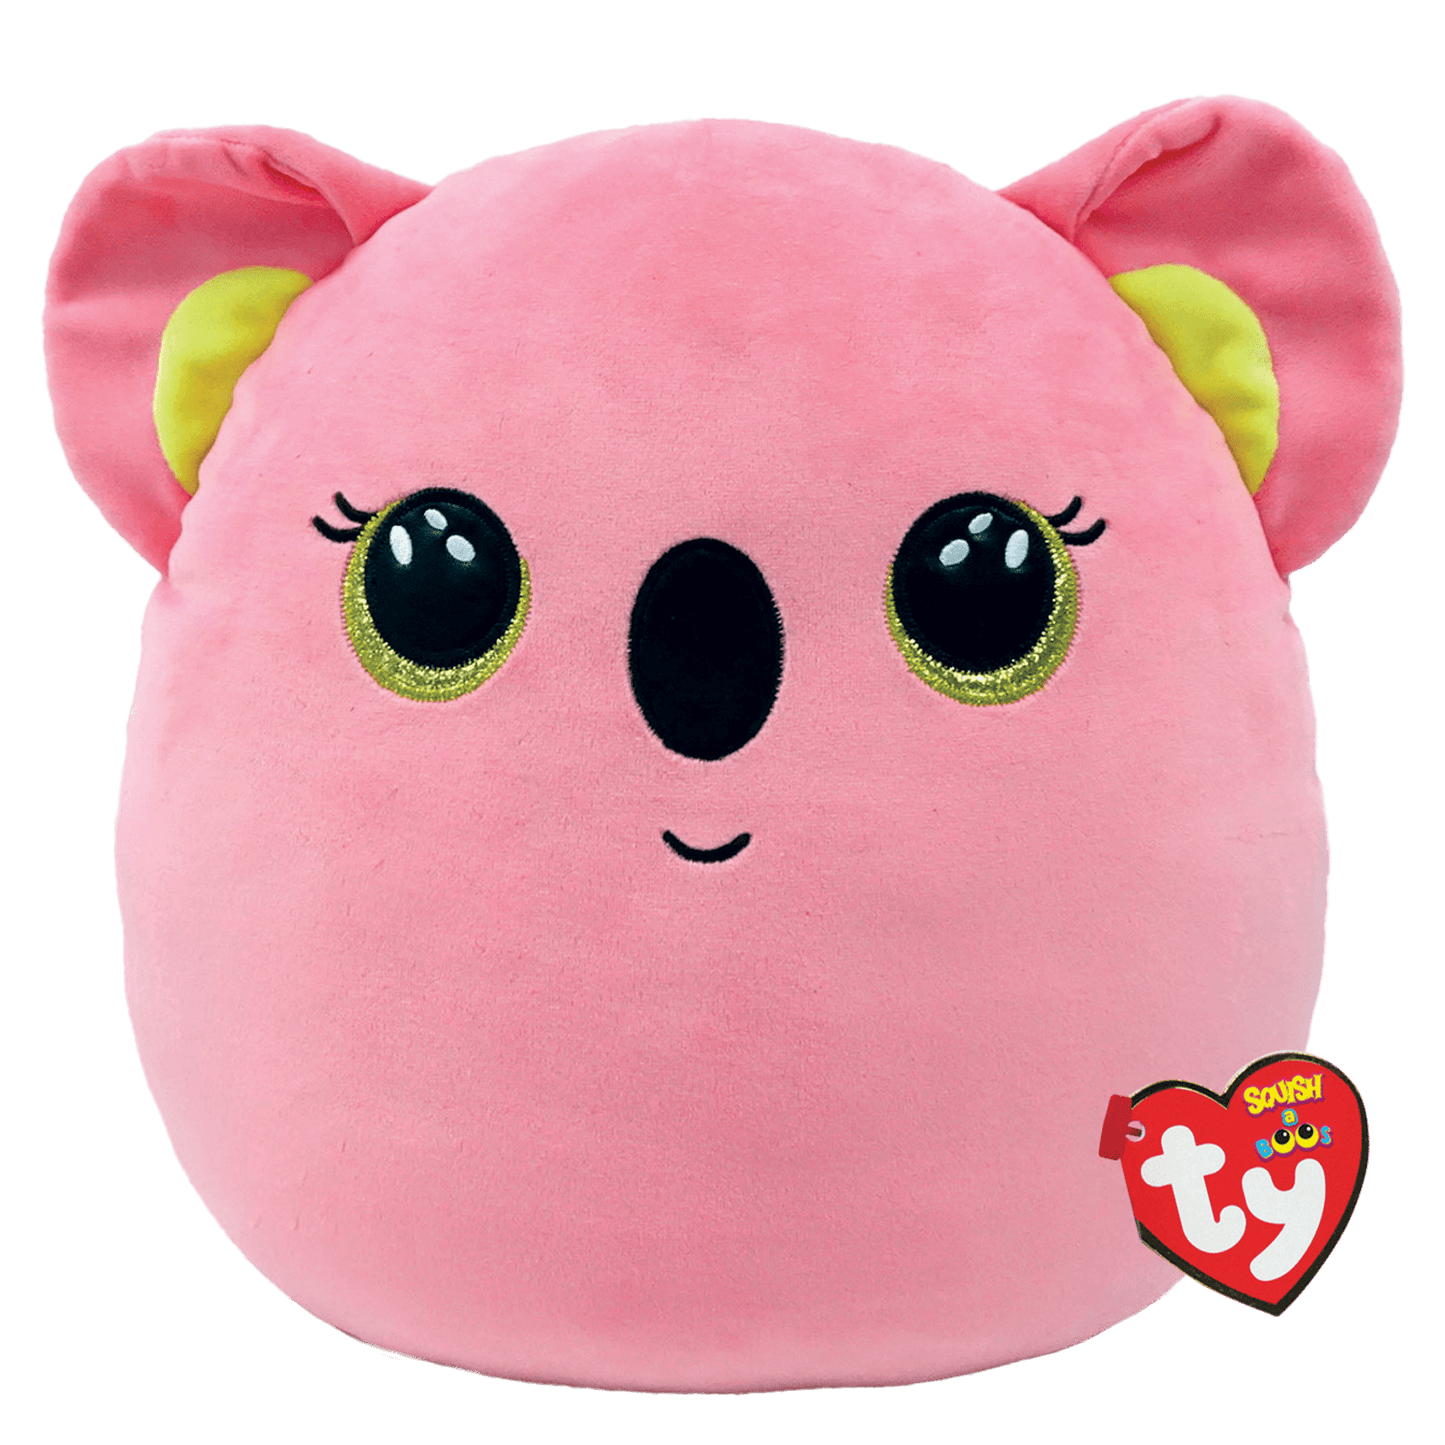 Personalised Ty Squish a boo Poppy Koala Pink Plush